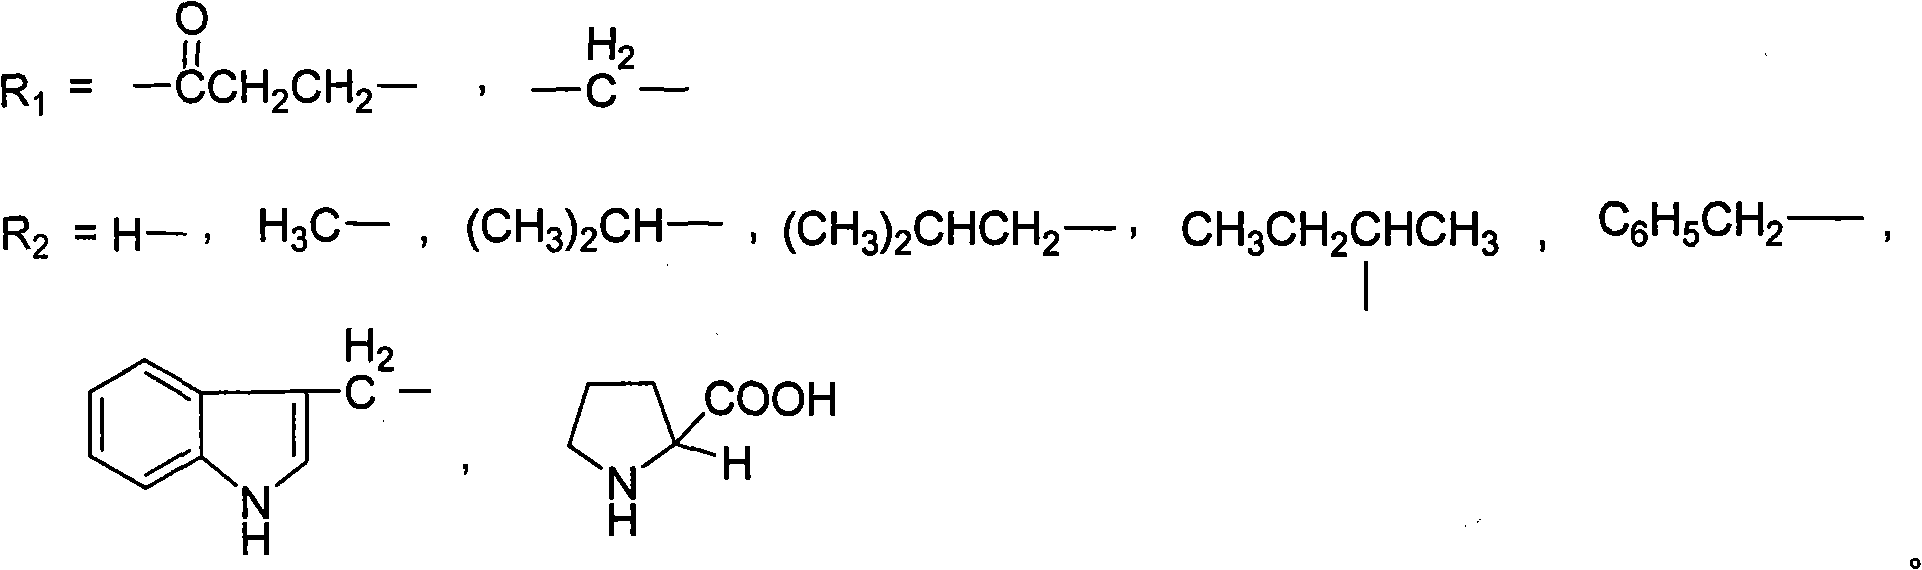 PEG (Polyethylene Glycol), mPEG (Methoxy Polyethylene Glycol) chemical modifier and method thereof for preparing water-soluble resveratrol prodrug